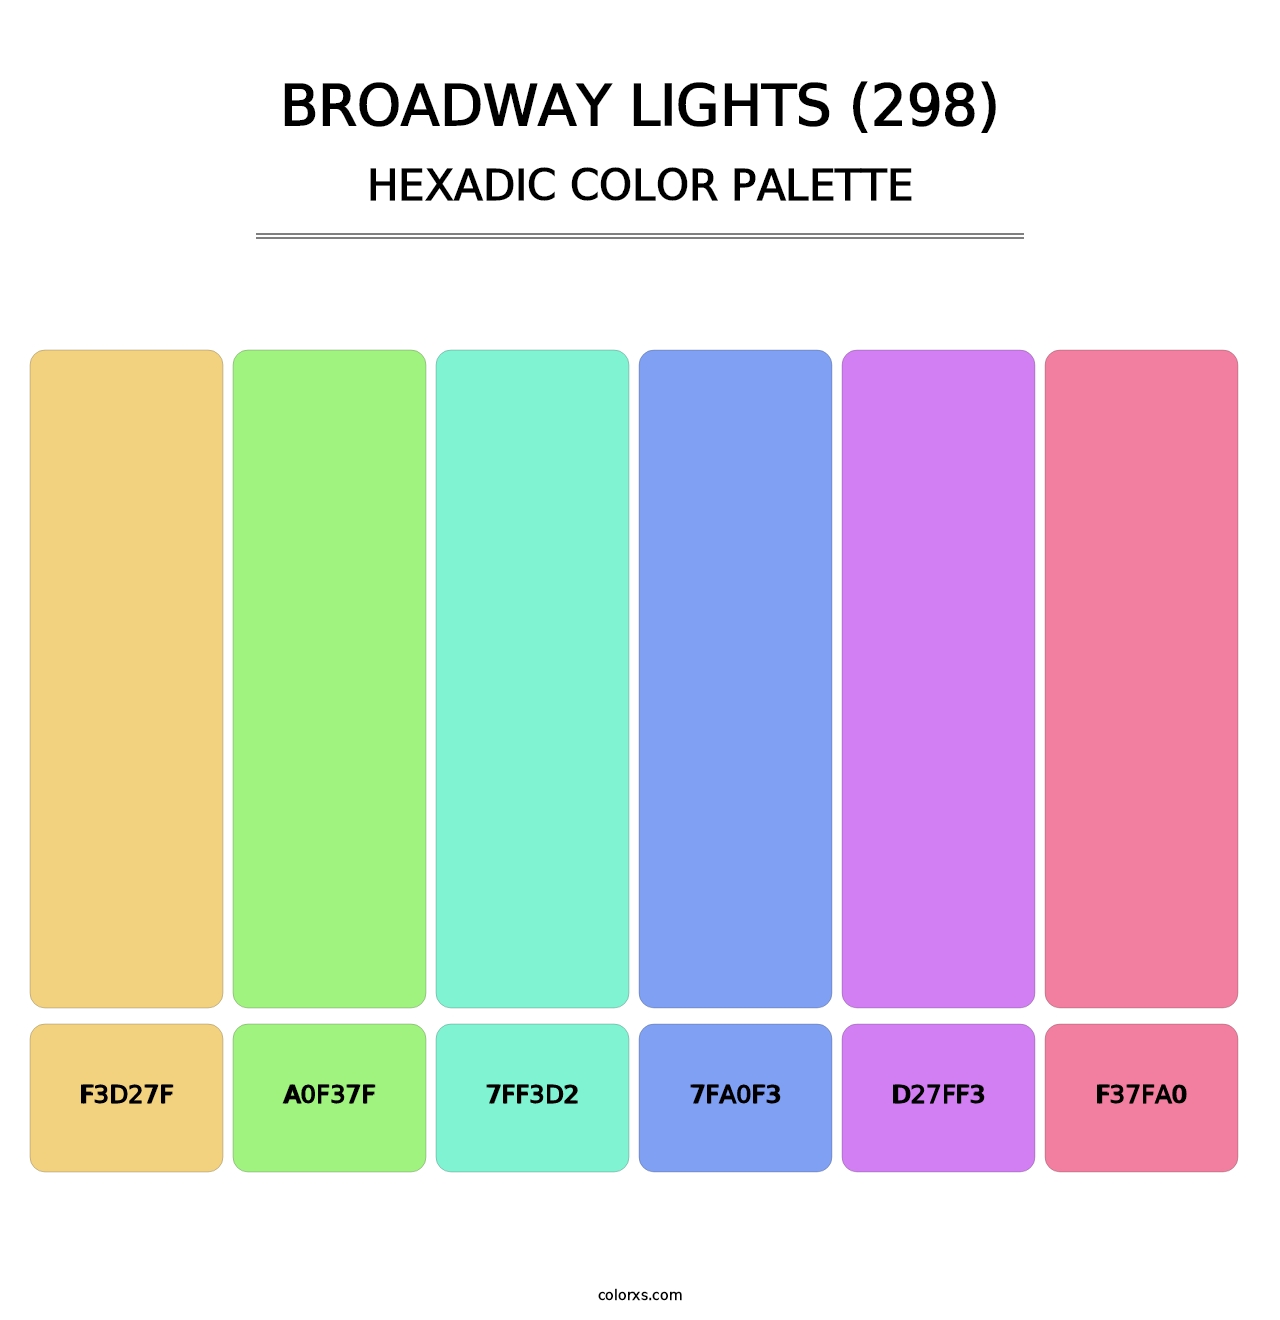 Broadway Lights (298) - Hexadic Color Palette